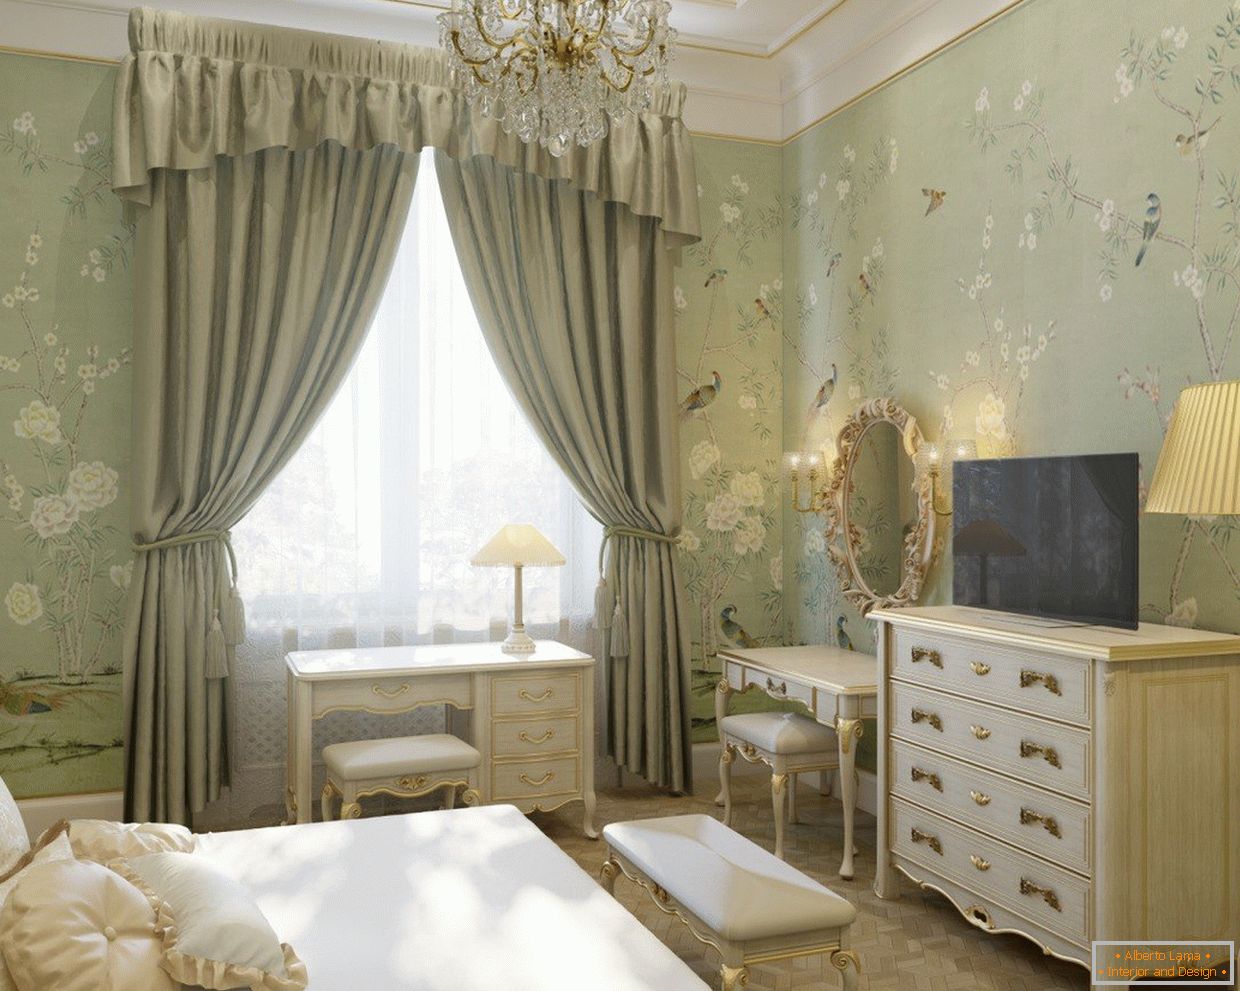 Dormitor - design în stil clasic